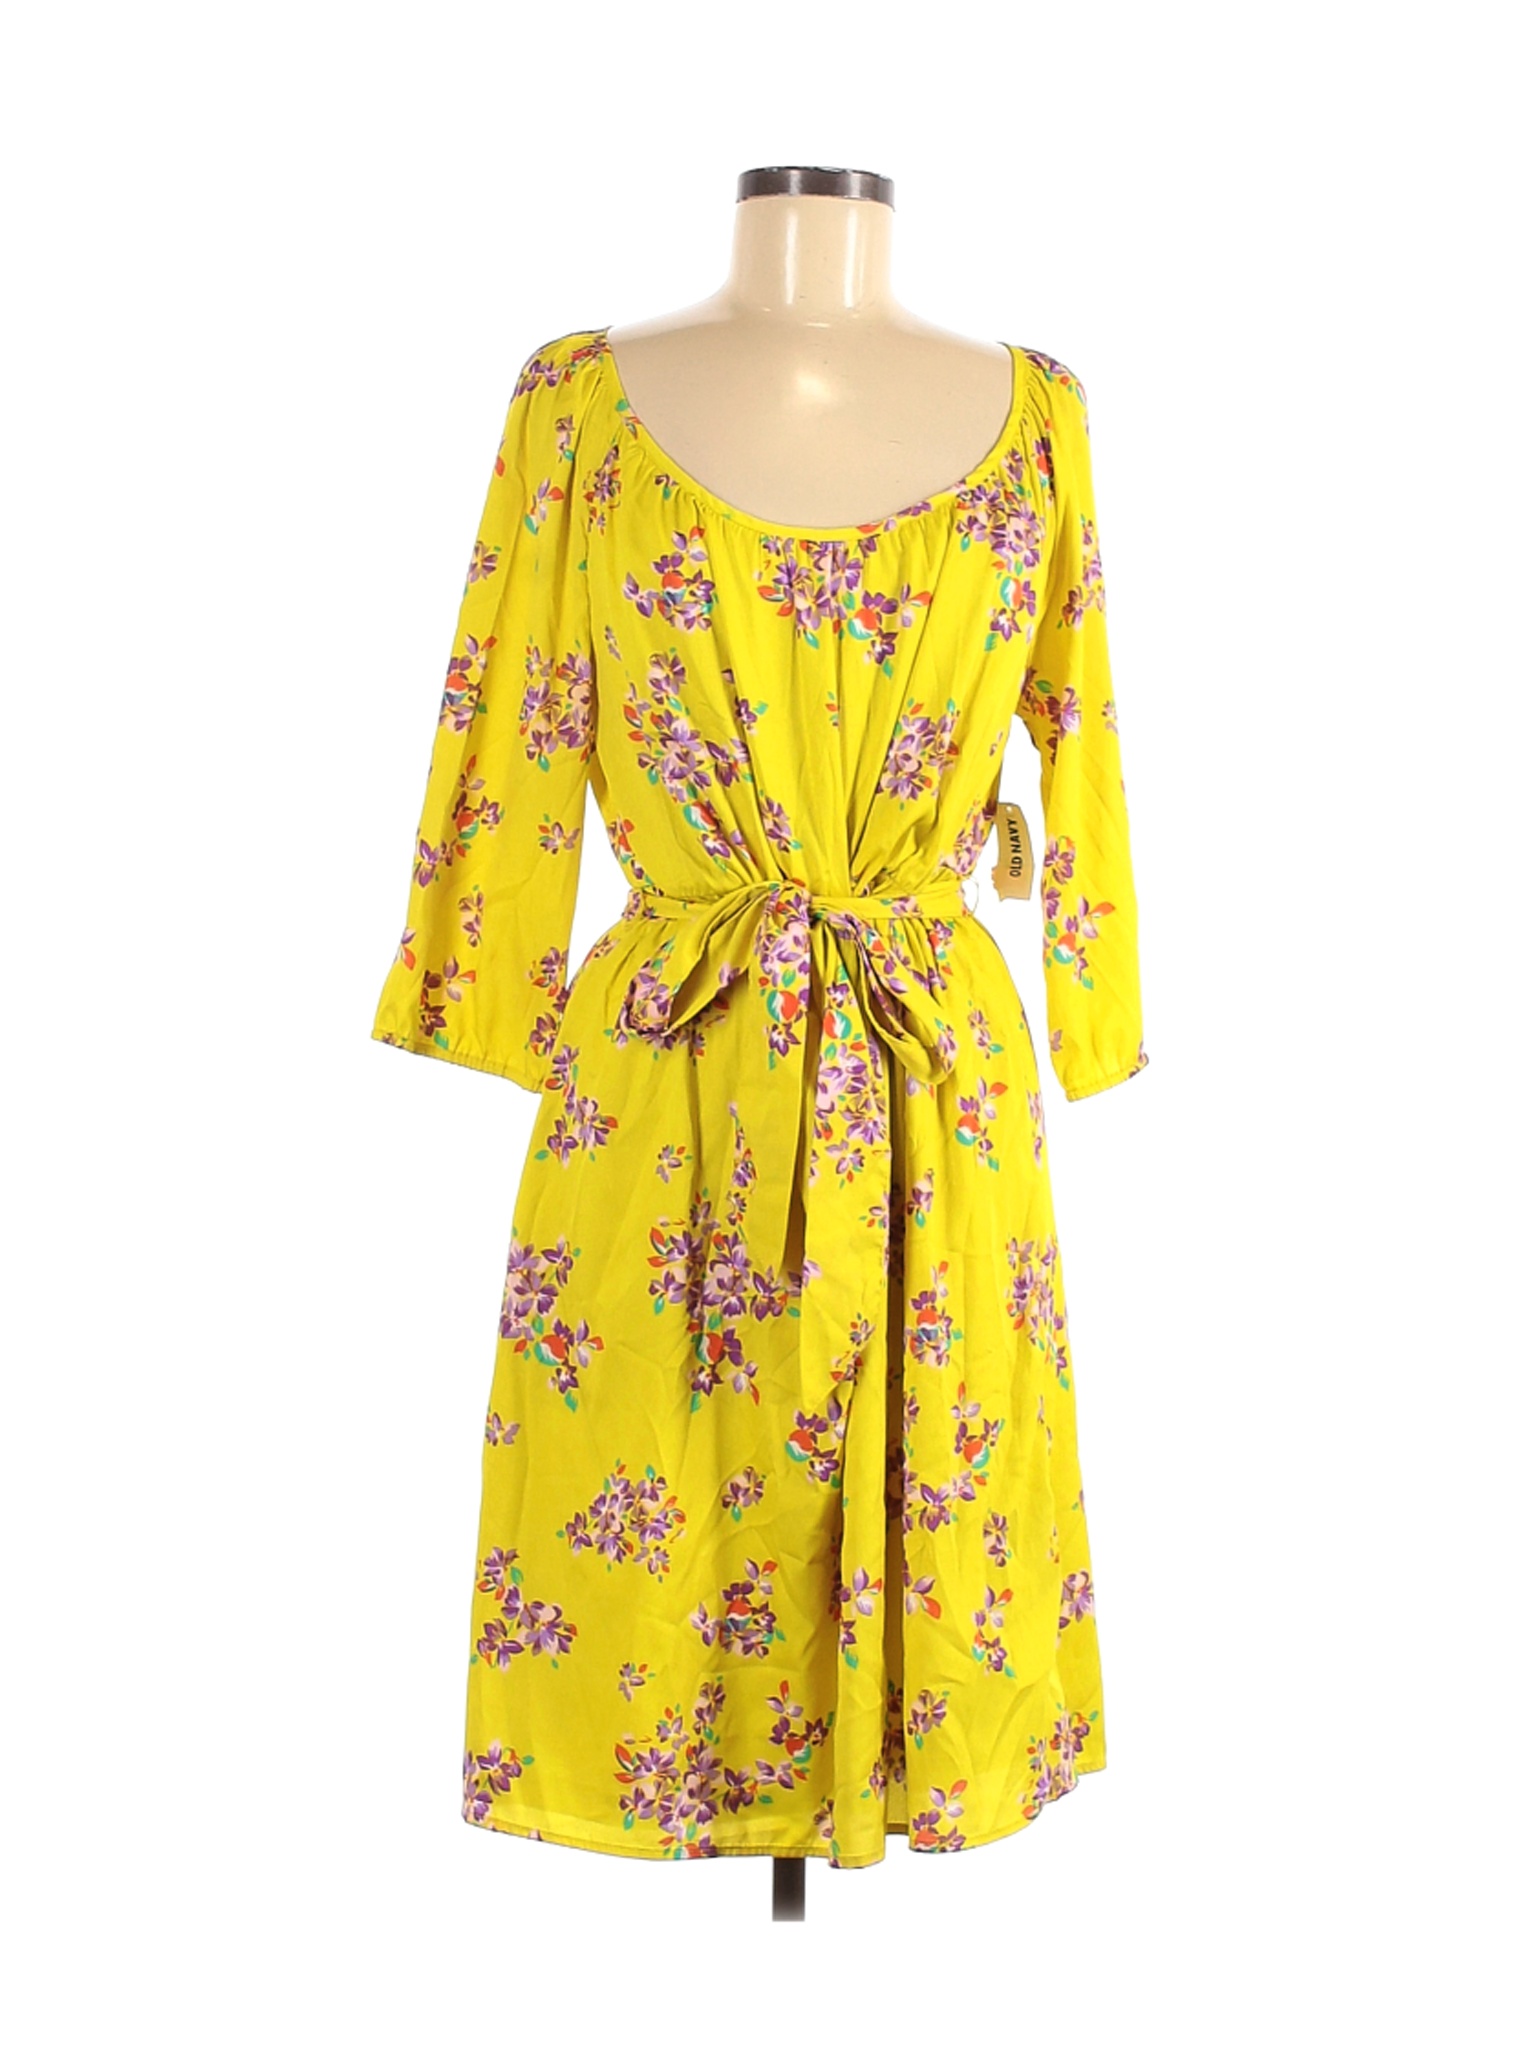 NWT Old Navy Women Yellow Casual Dress L | eBay